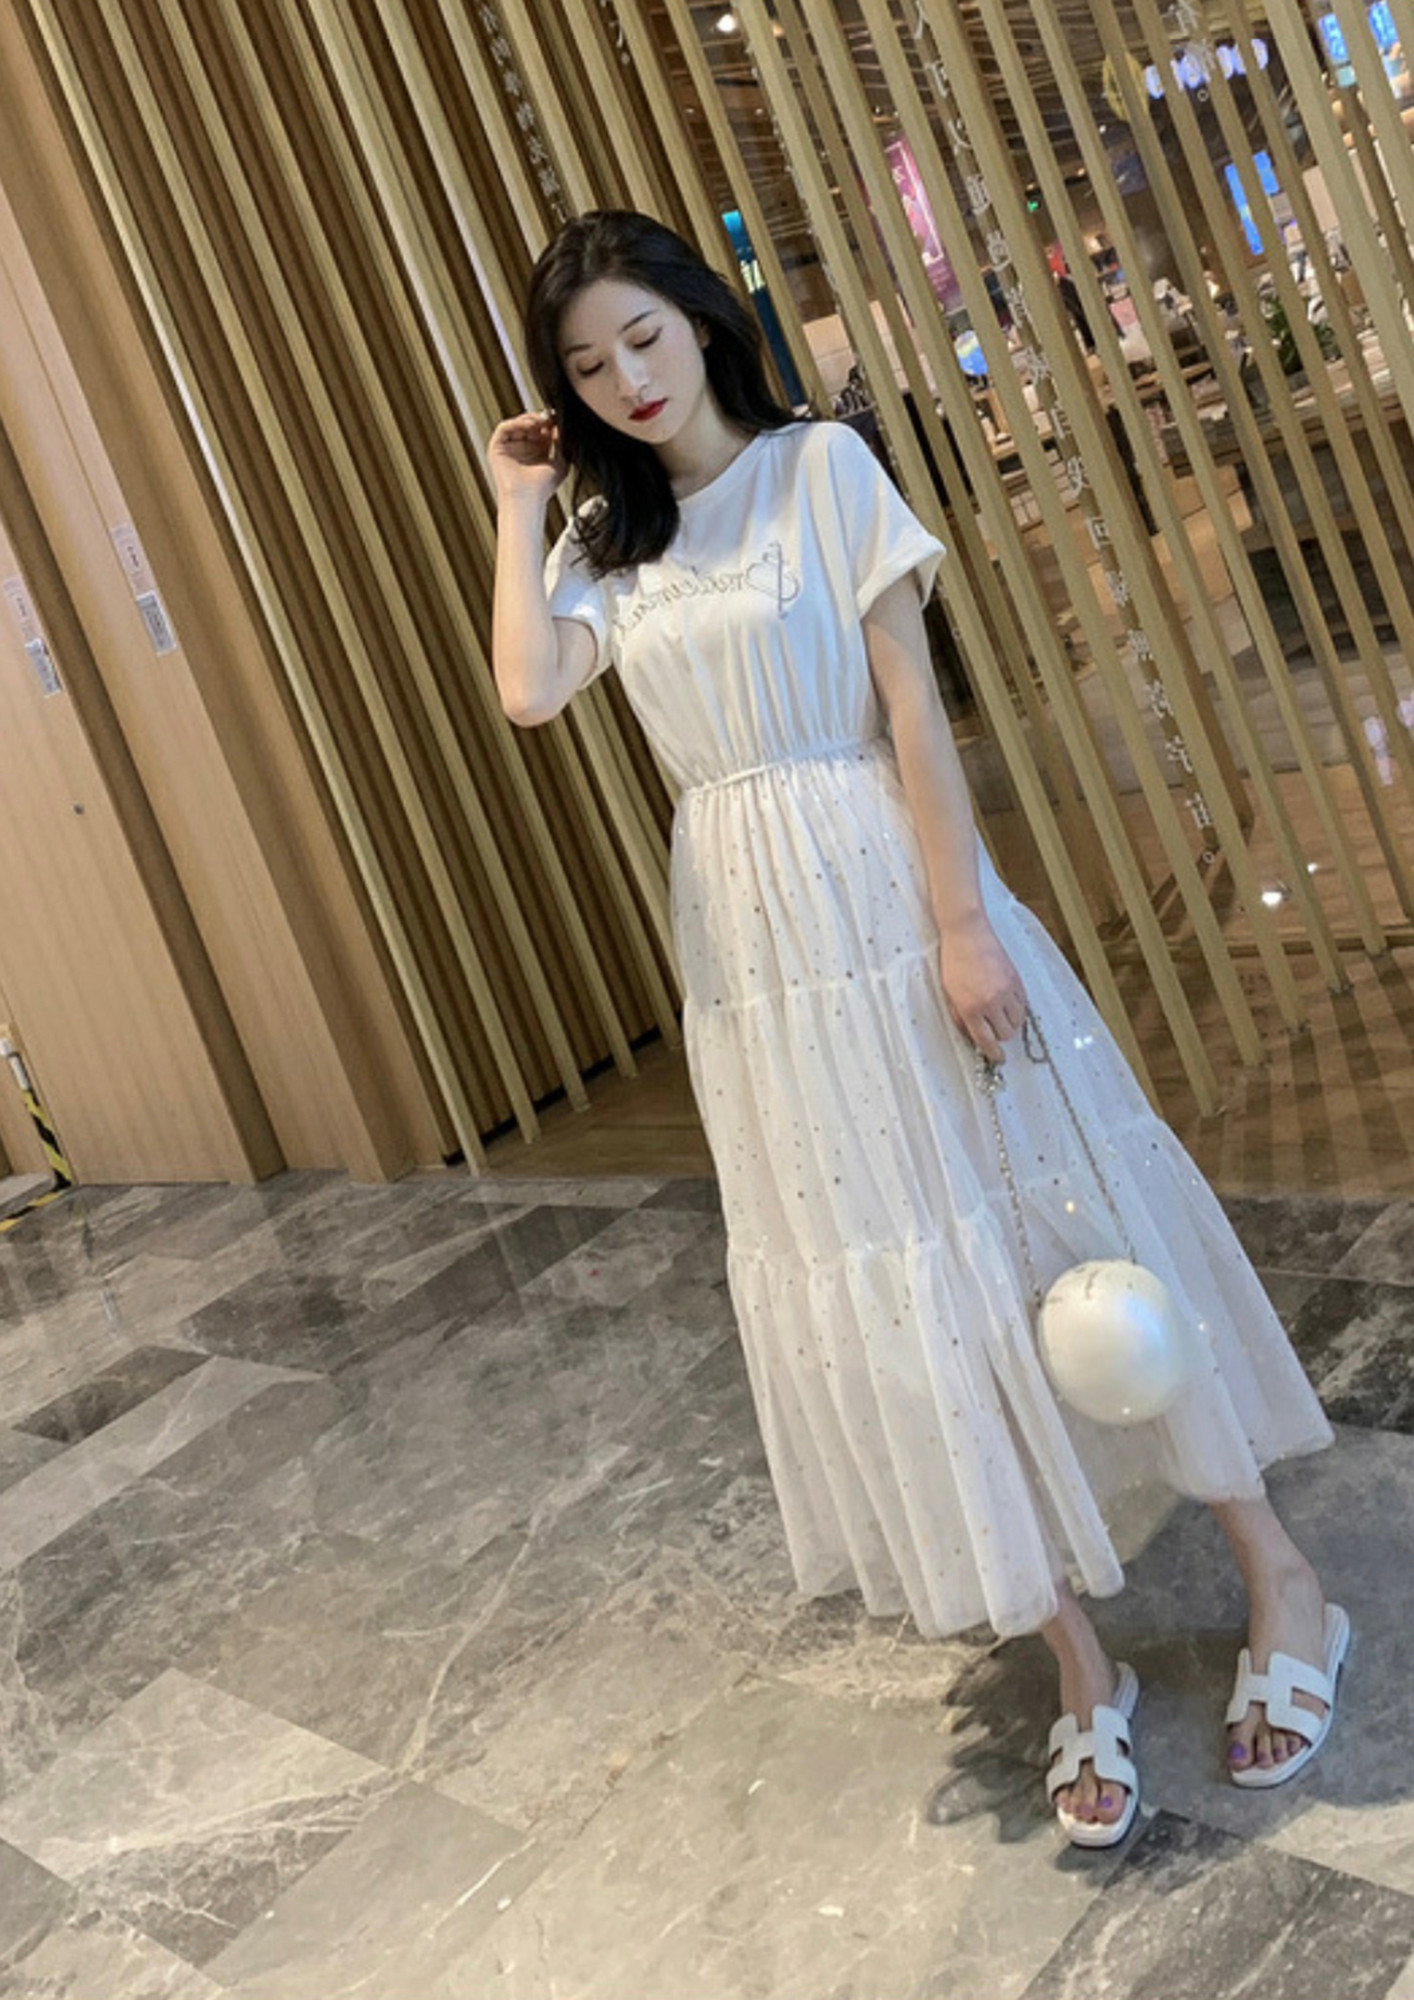 SDCM Elegant White Dress Women Square Neck Long Sleeve Dresses Vintage  Autumn Fairy Dress Korean Fashion Outfits White XL : Amazon.com.be: Fashion